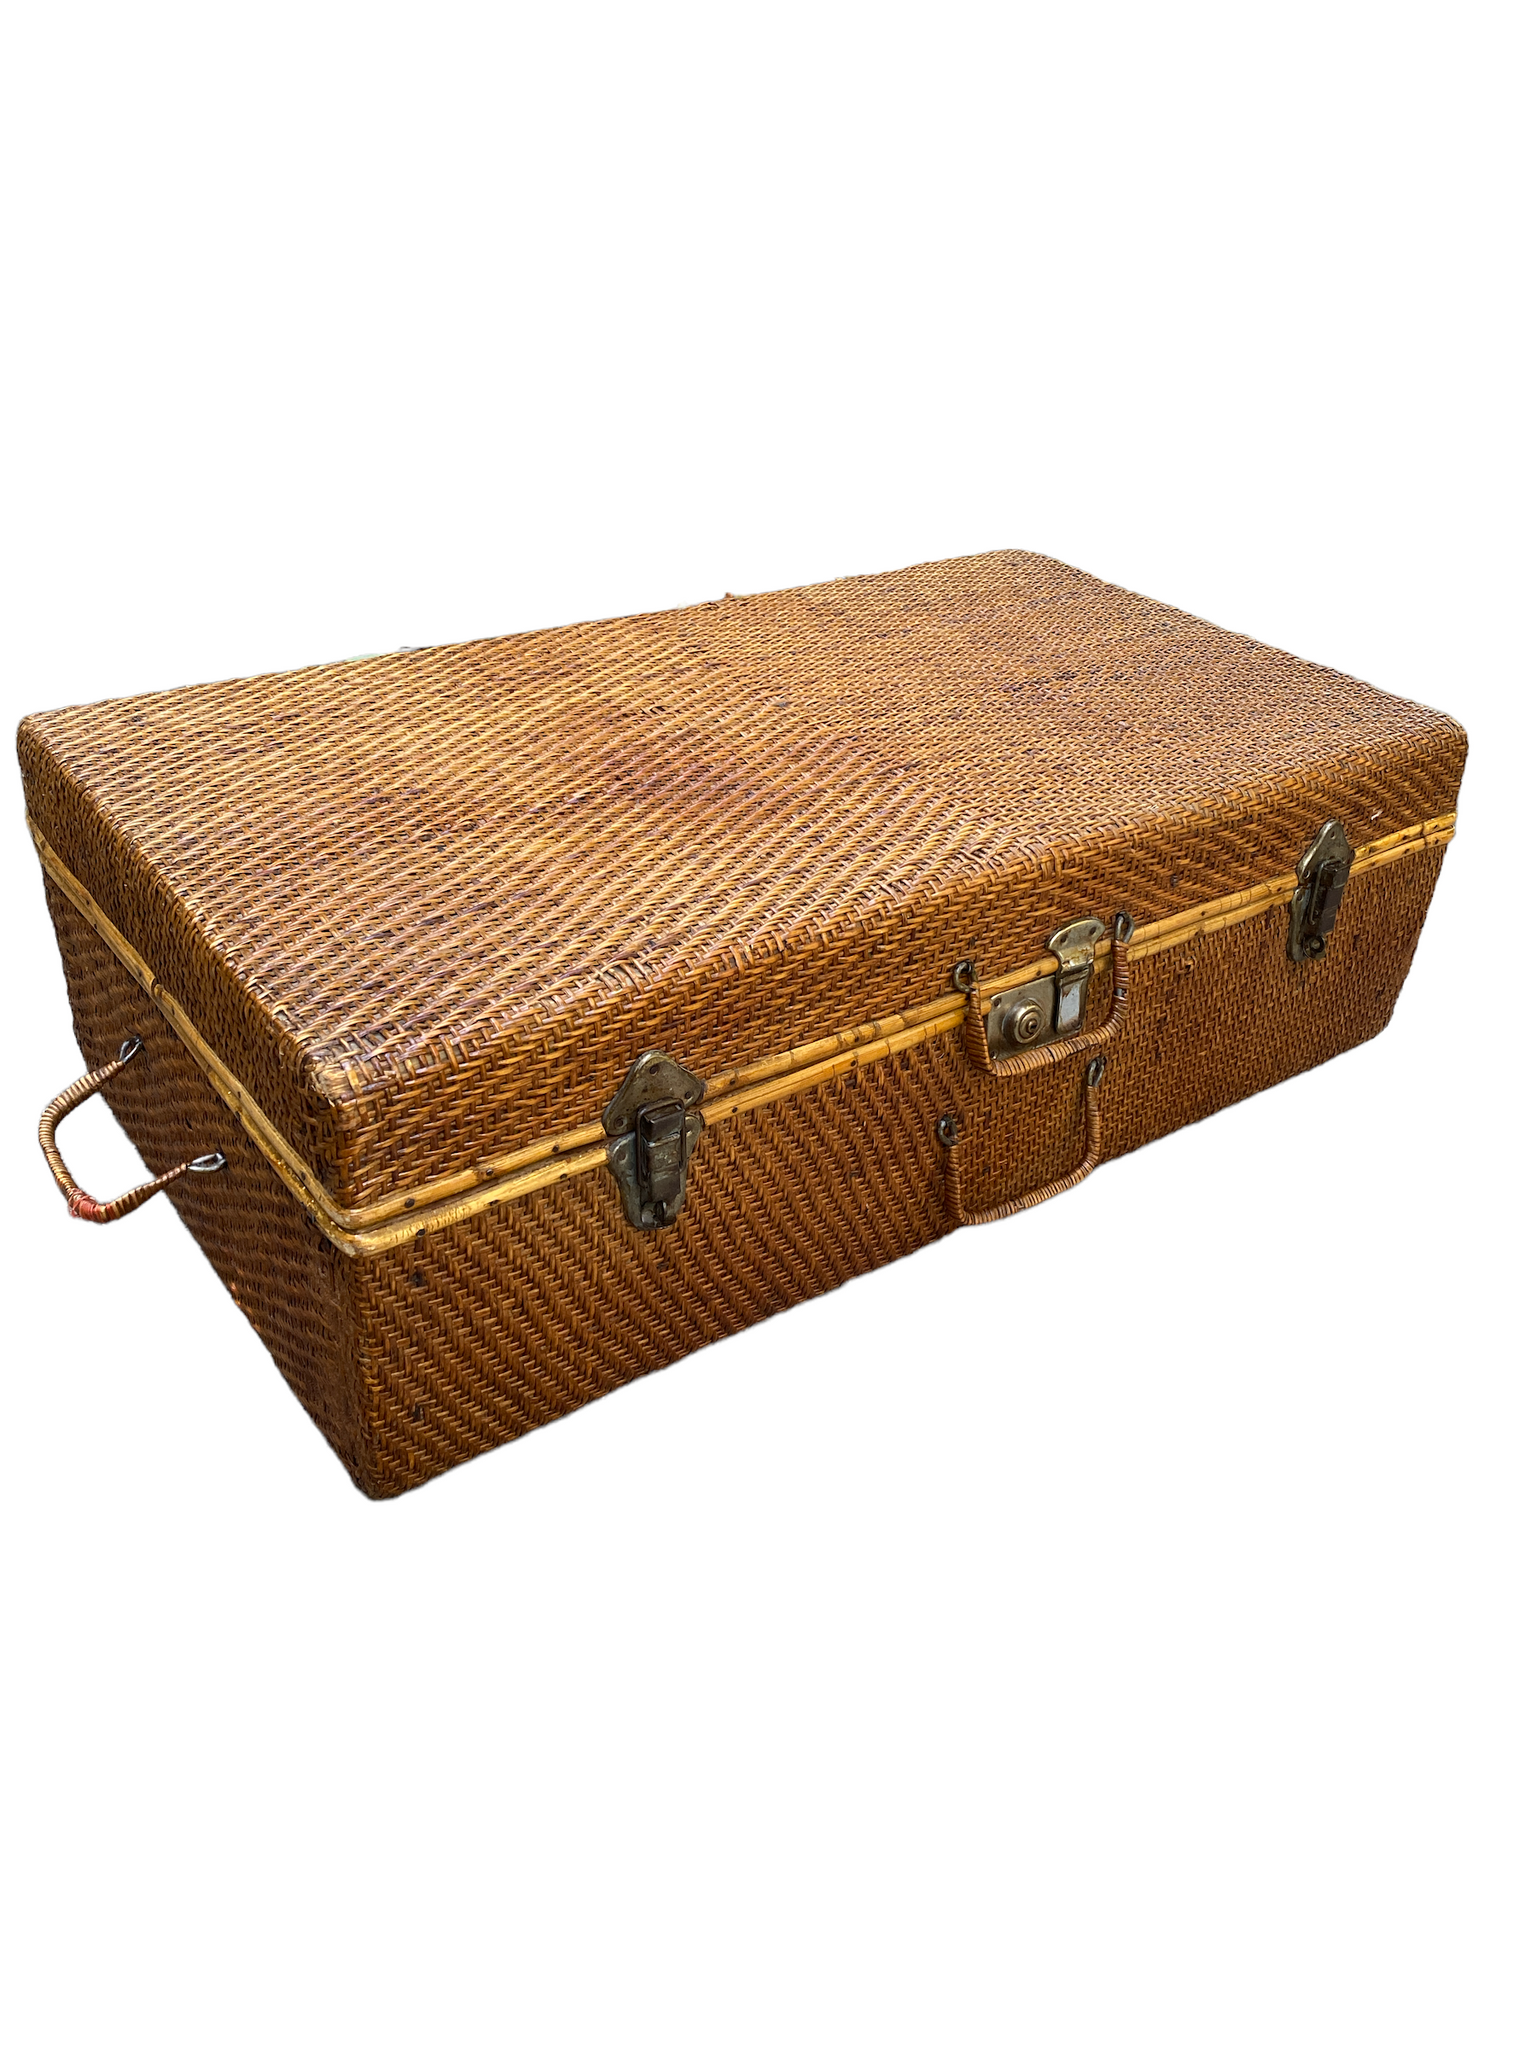 English Rattan Suitcase